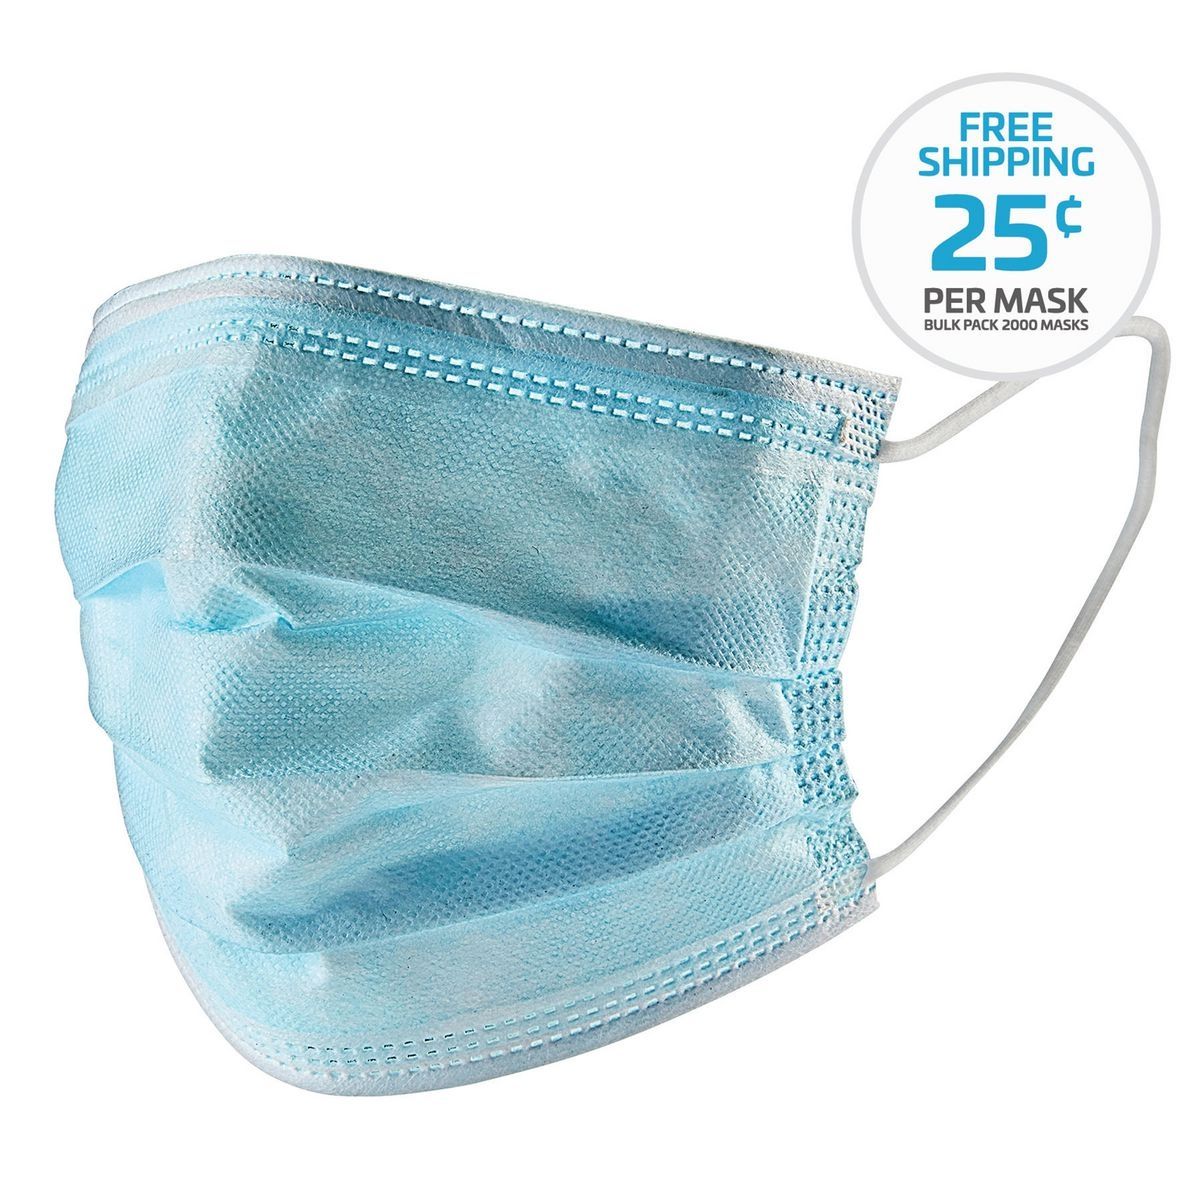 IDC 3-Ply Disposable Face Masks - Bulk Pack, 2000 Masks - 200, 10 Packs